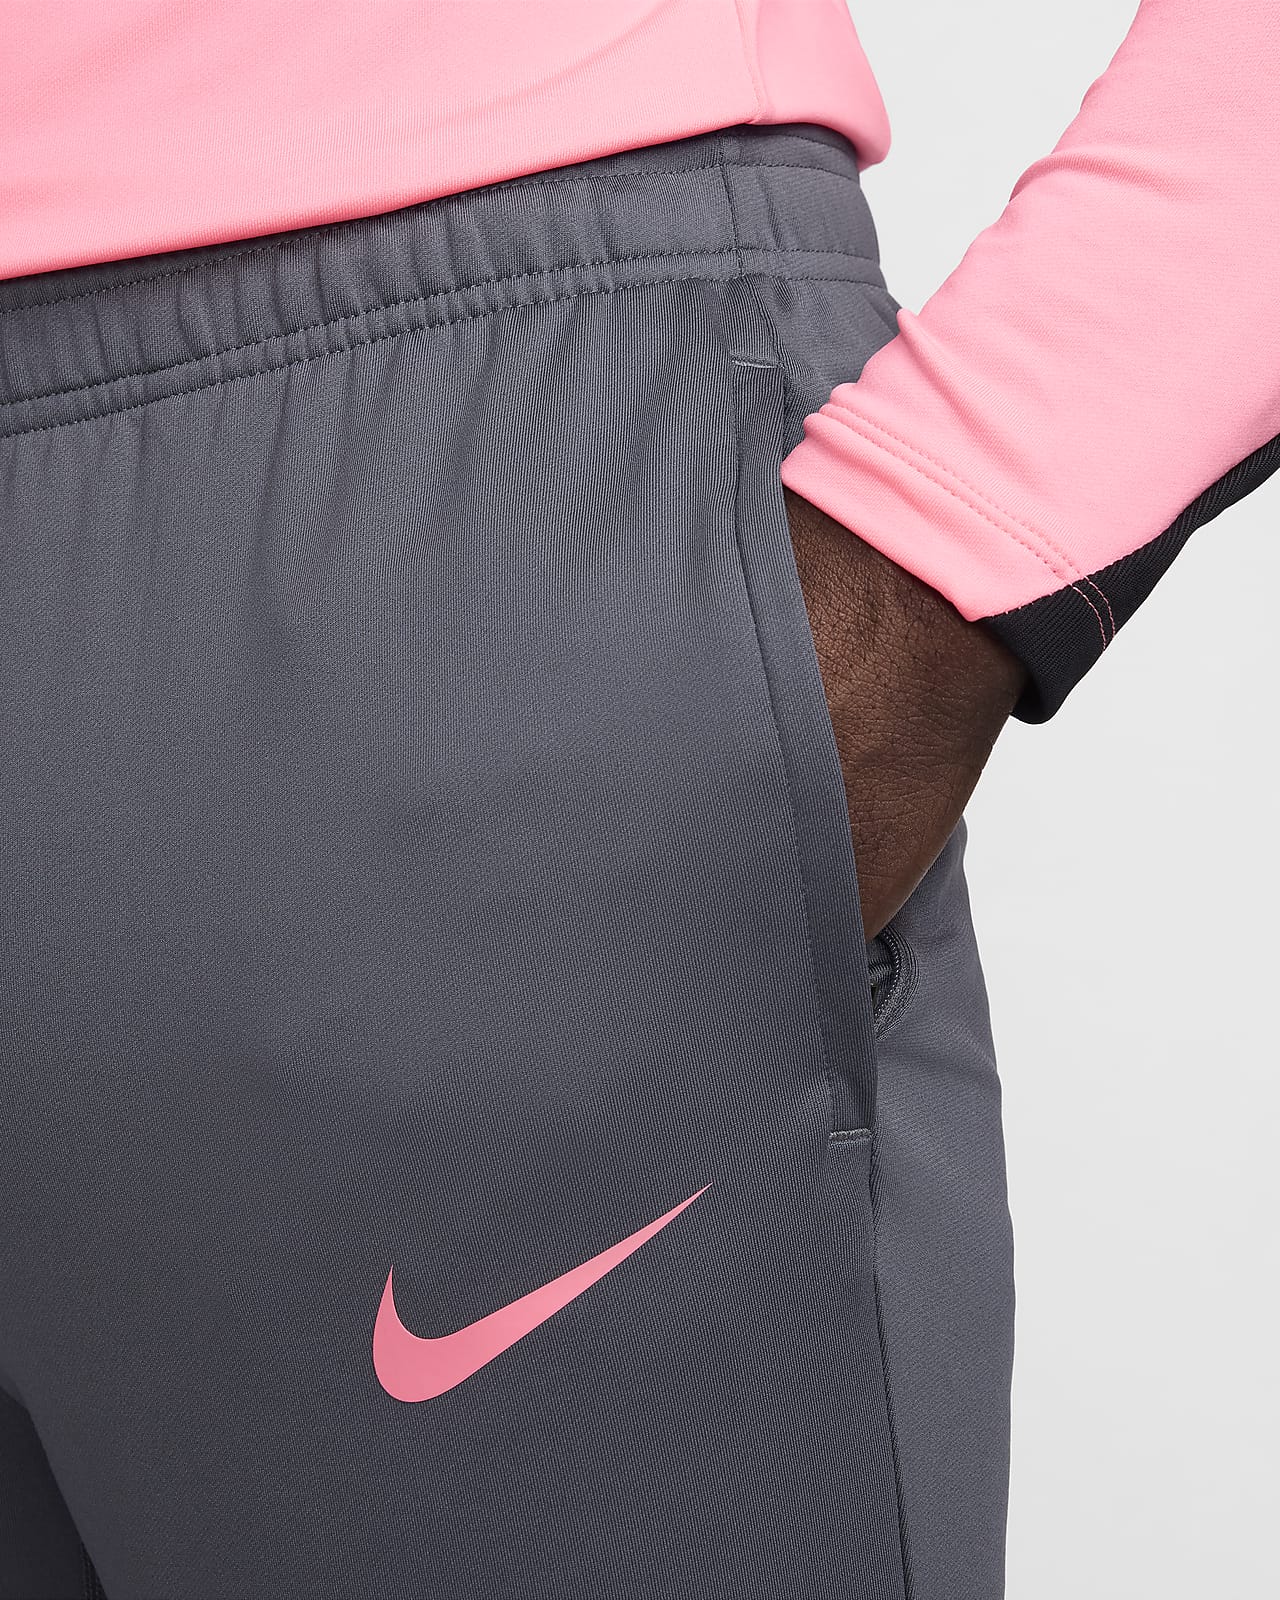 Nike Strike Men's Dri-FIT Soccer Pants